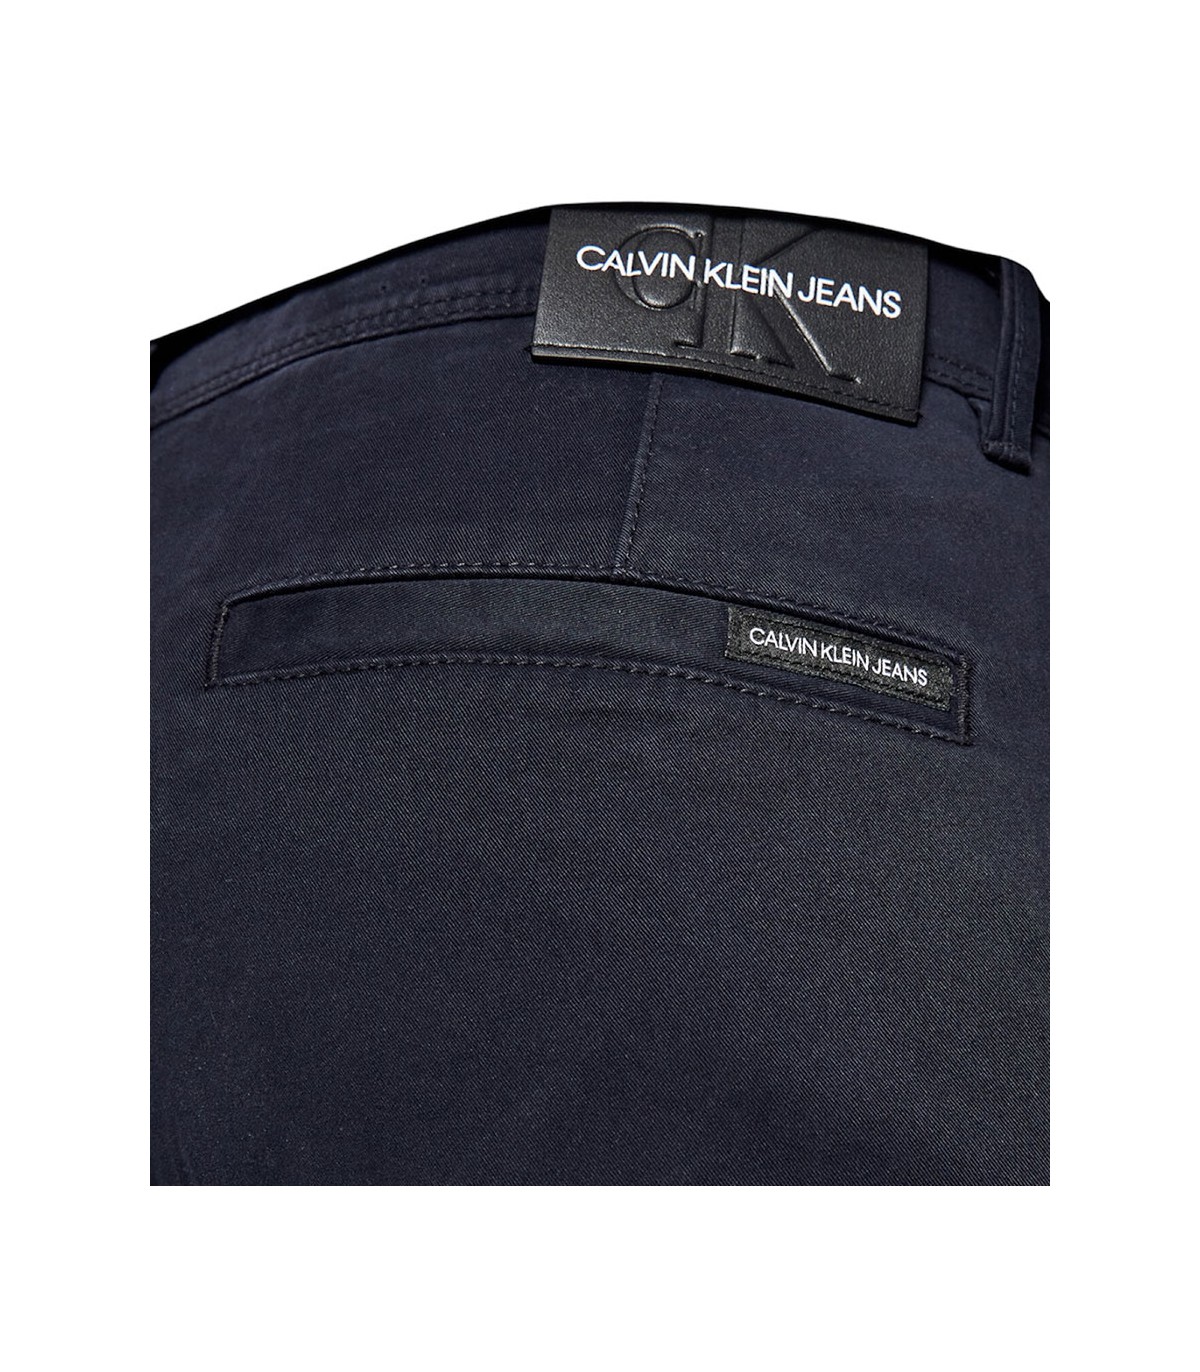 CALVIN KLEIN JEANS: trousers for women - Black | Calvin Klein Jeans trousers  J20J221301 online at GIGLIO.COM